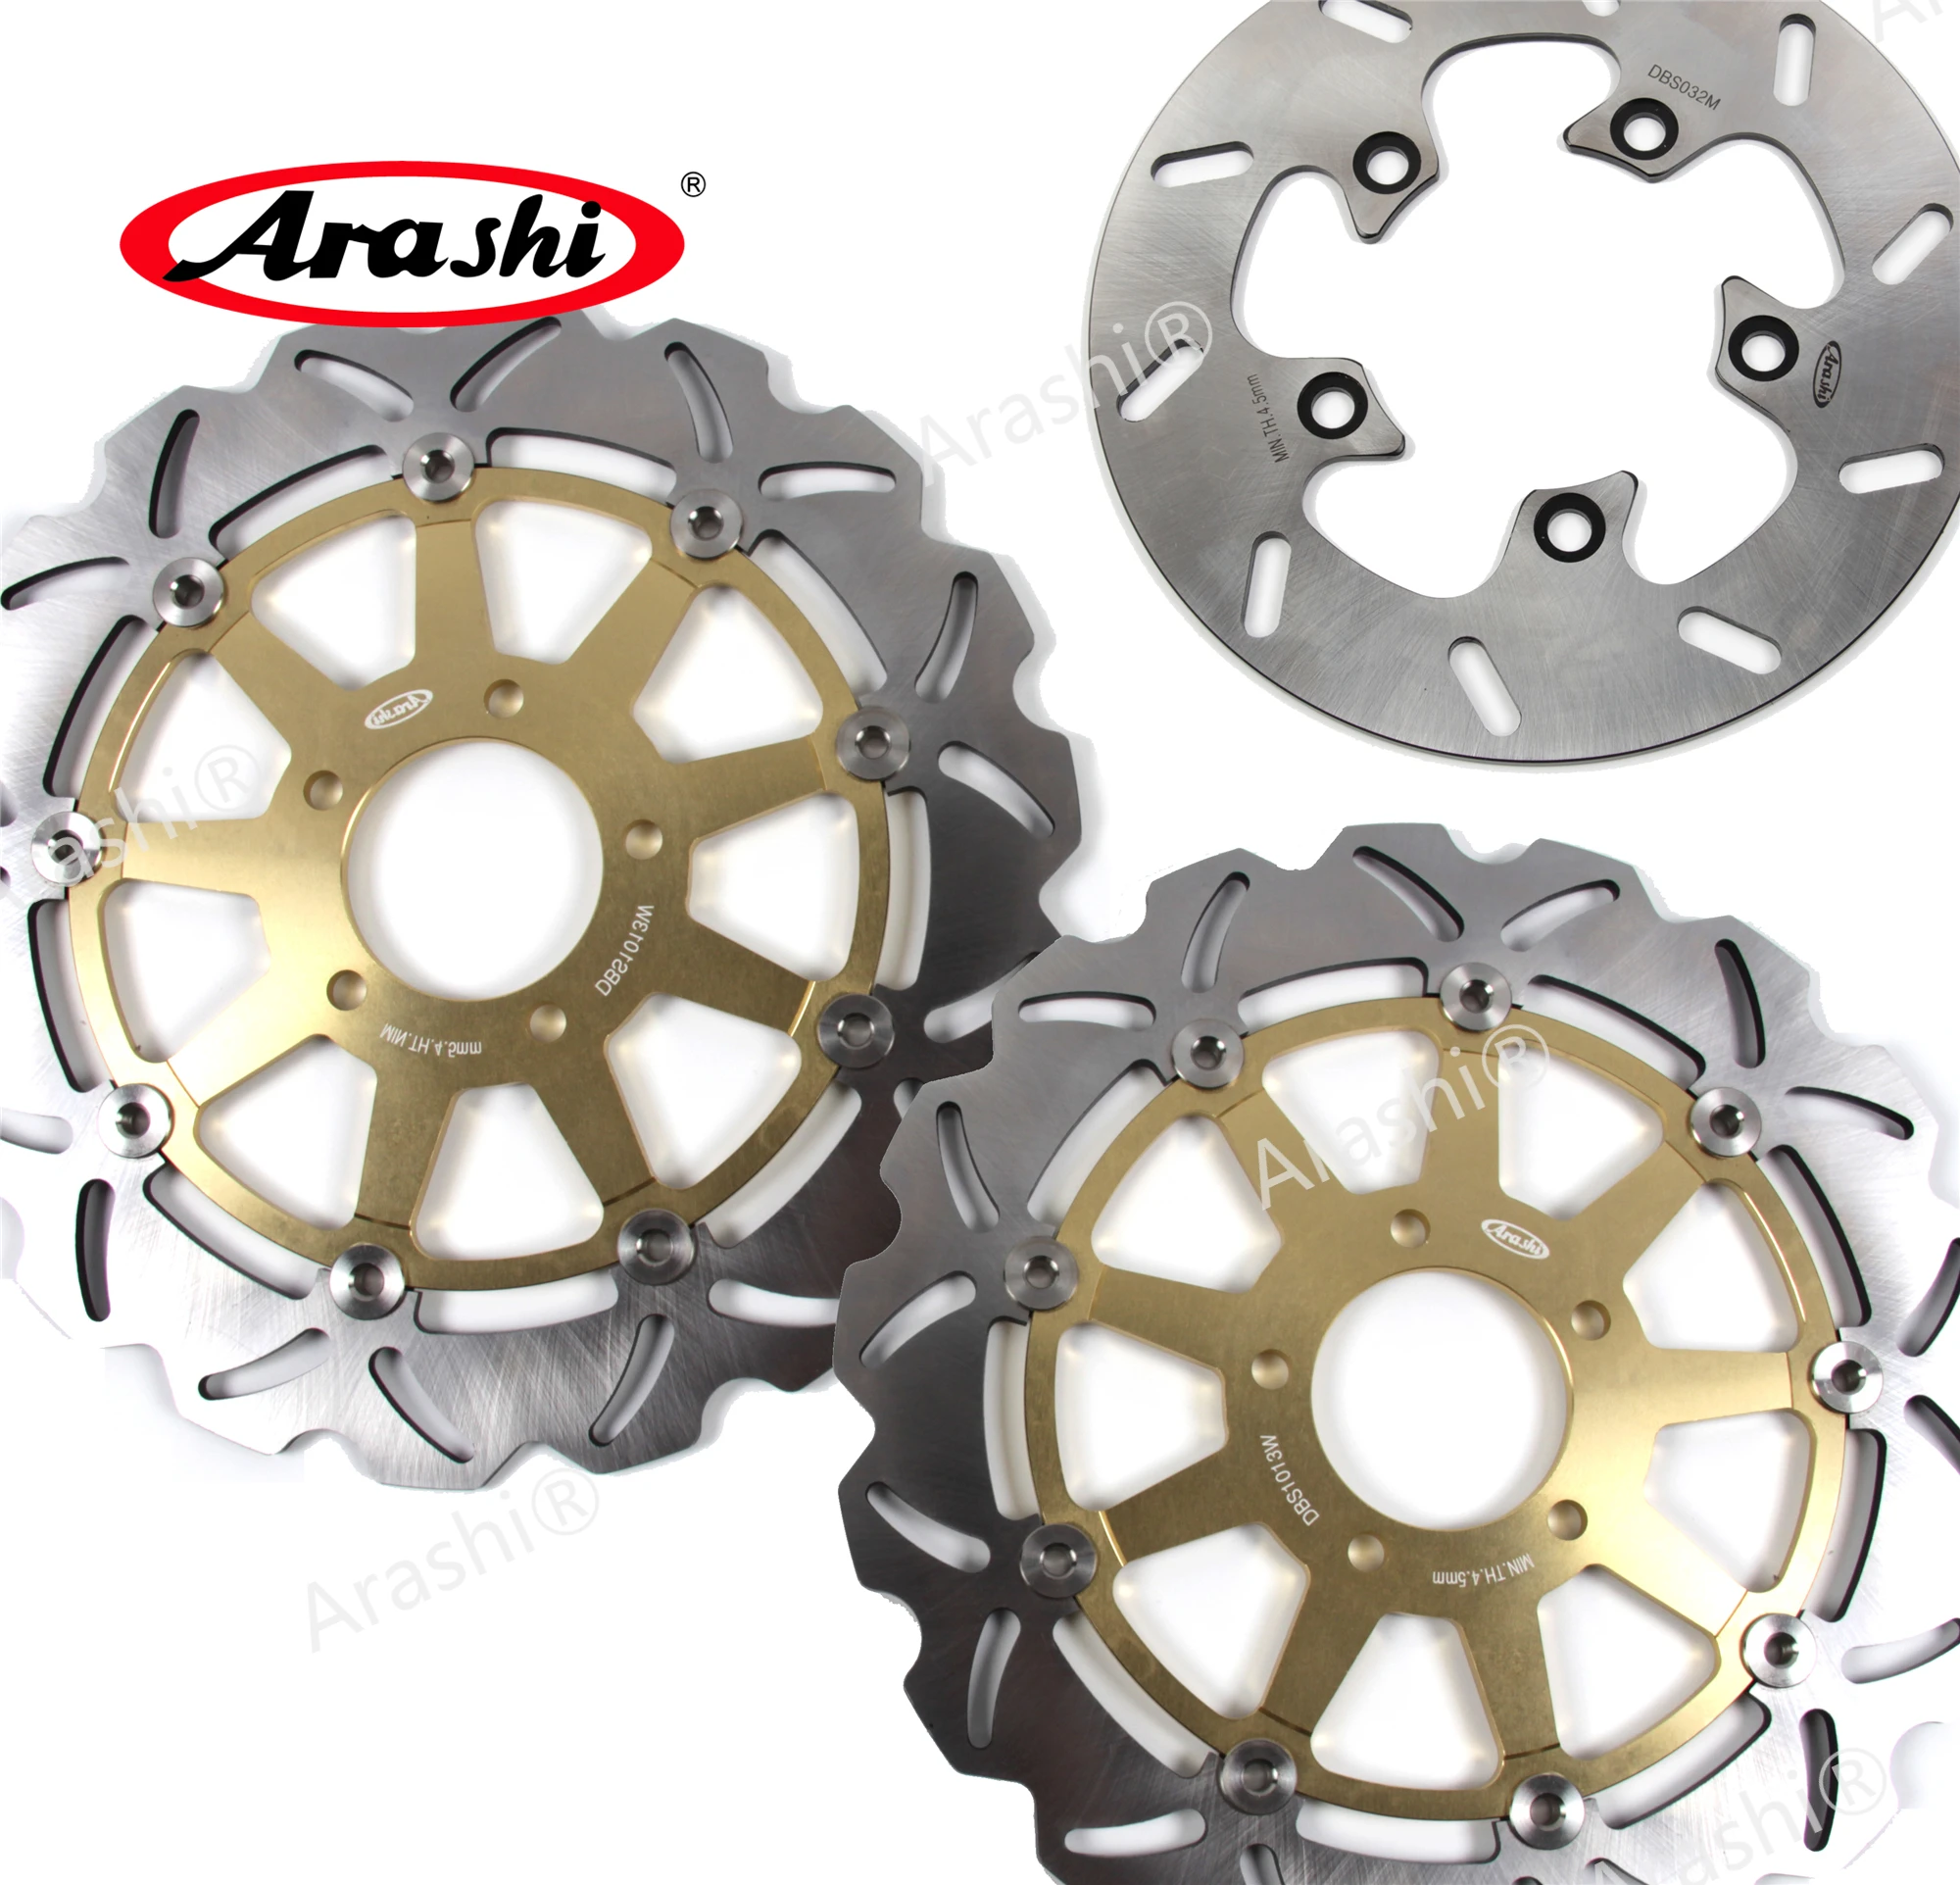 

ARASHI TL1000R CNC Front Rear Brake Rotor Disc Disk Plate For SUZUKI TL 1000 R 1998 - 2003 TL1000 1999 2000 2001 2002 TL1000